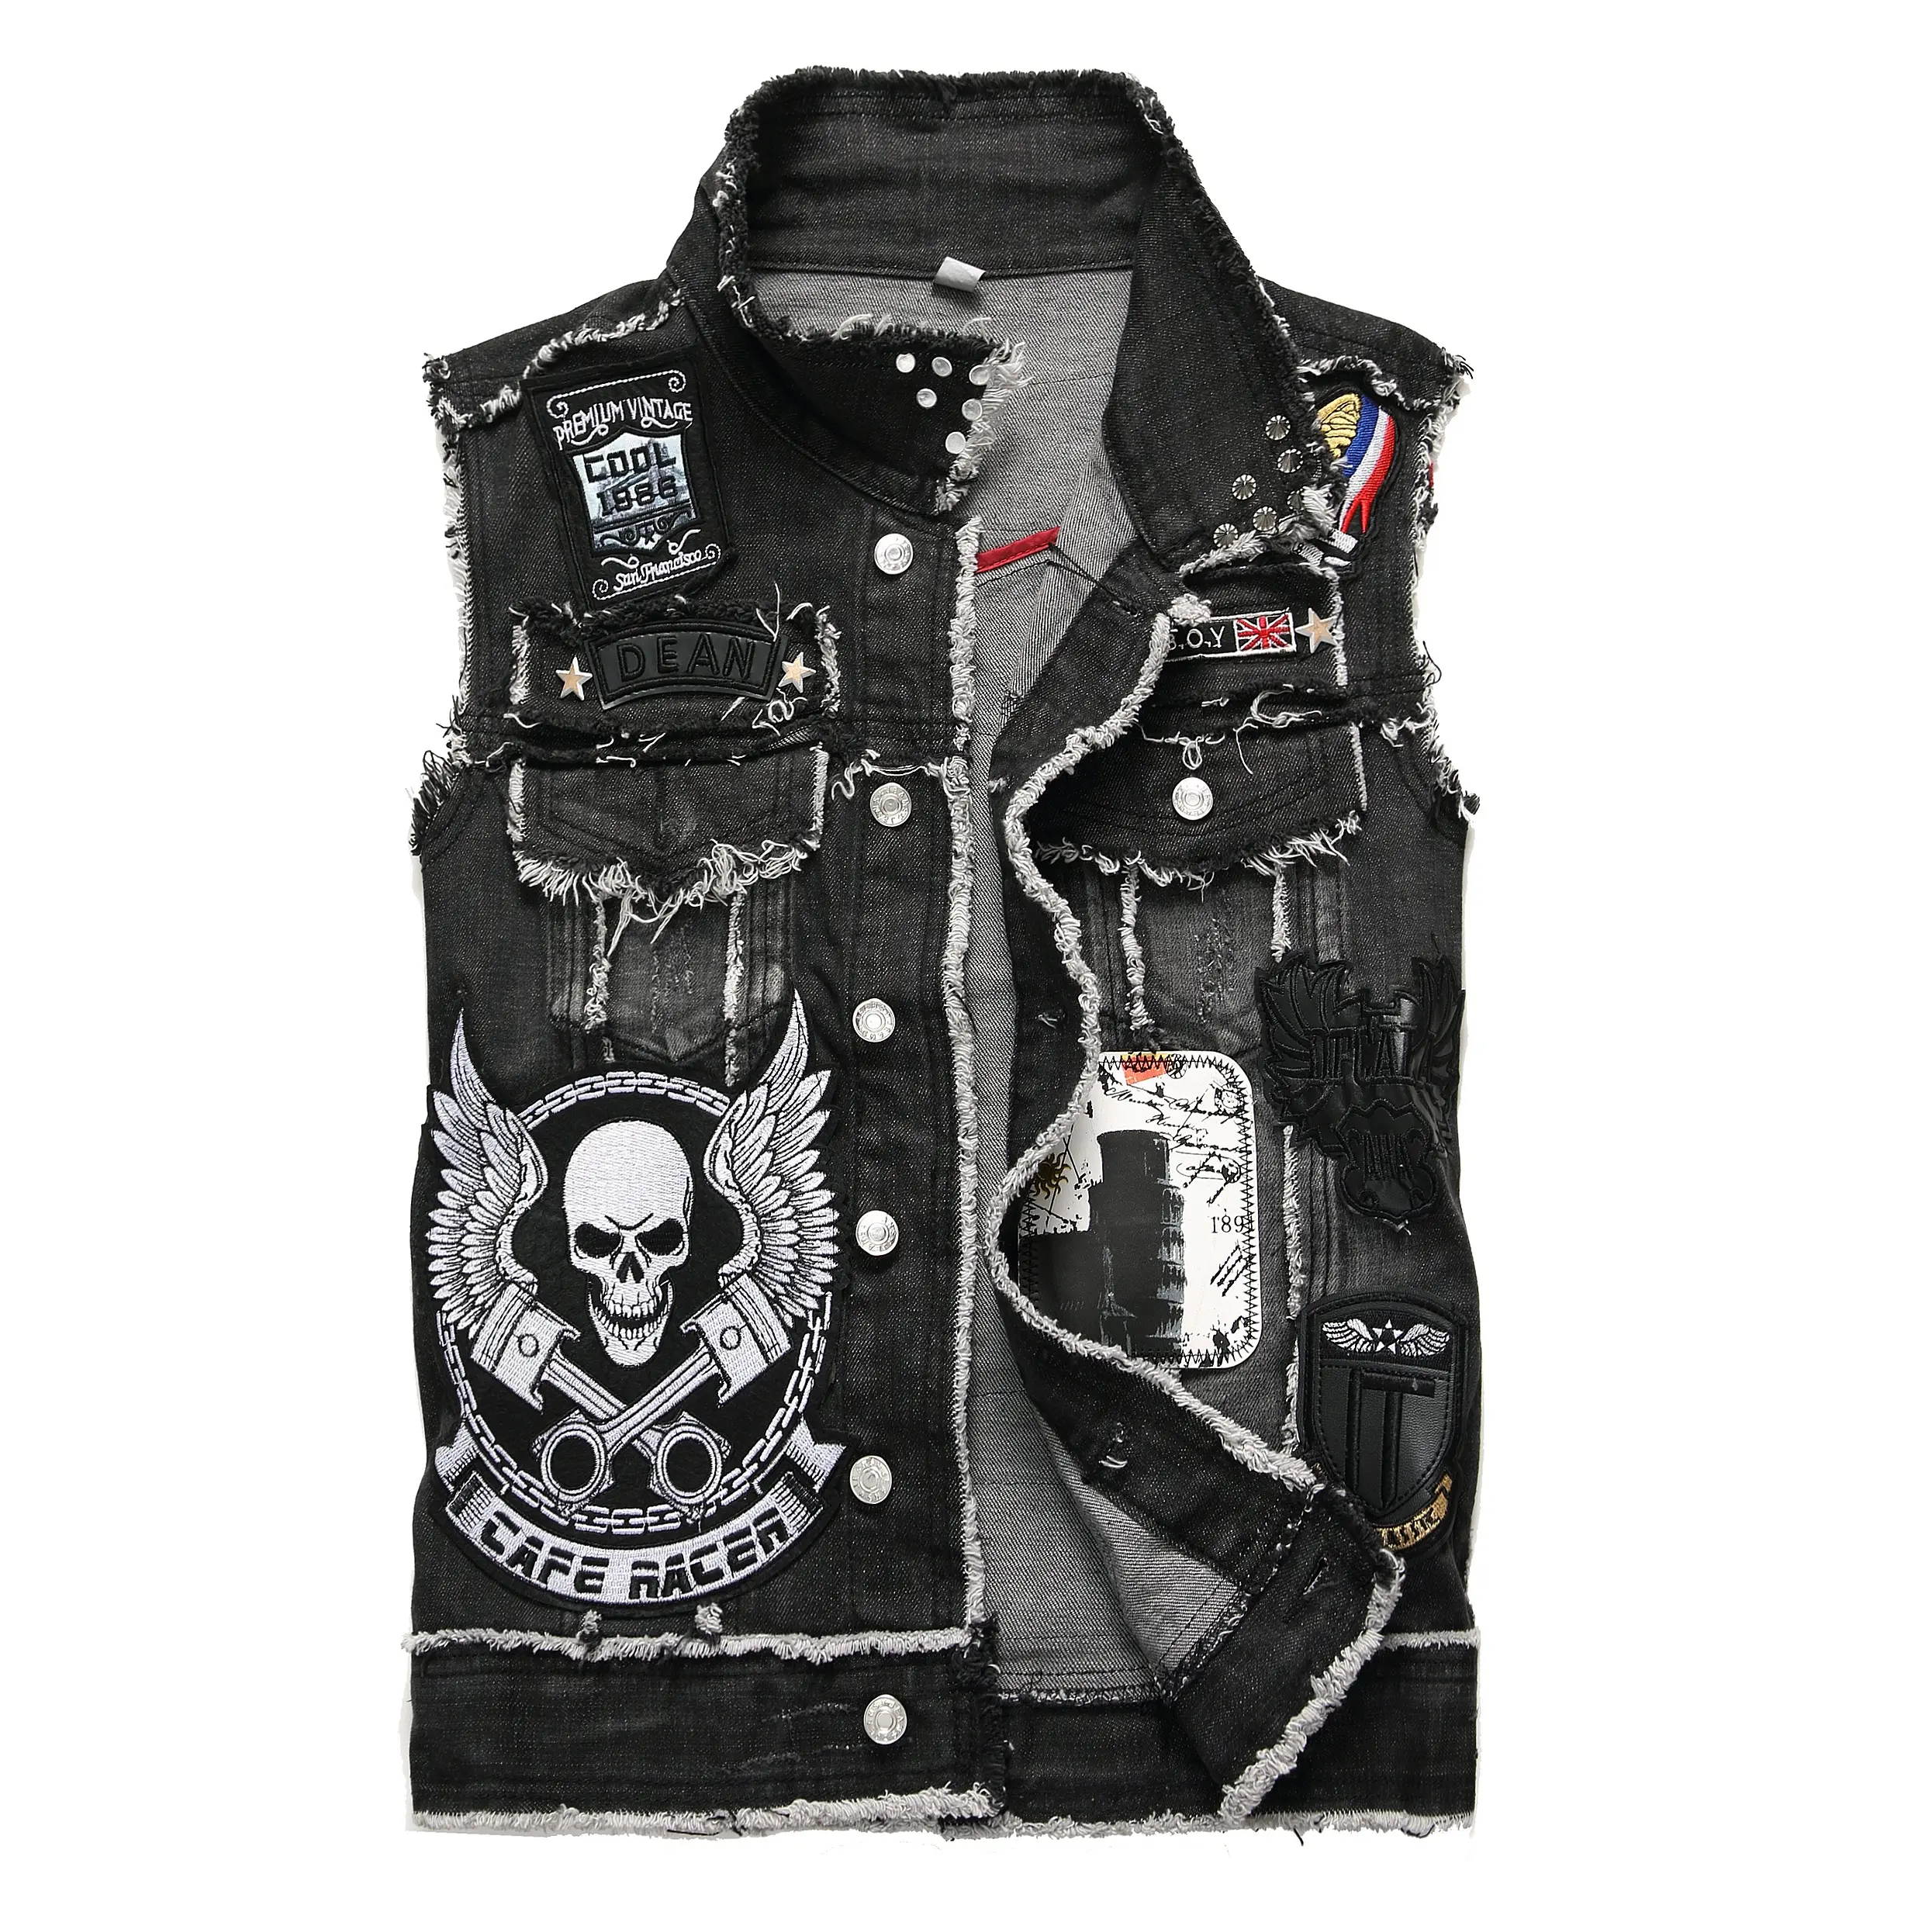 Best Wholesales Skull Embroidery Black Denim Jacket Vest For Men Cheapと価格